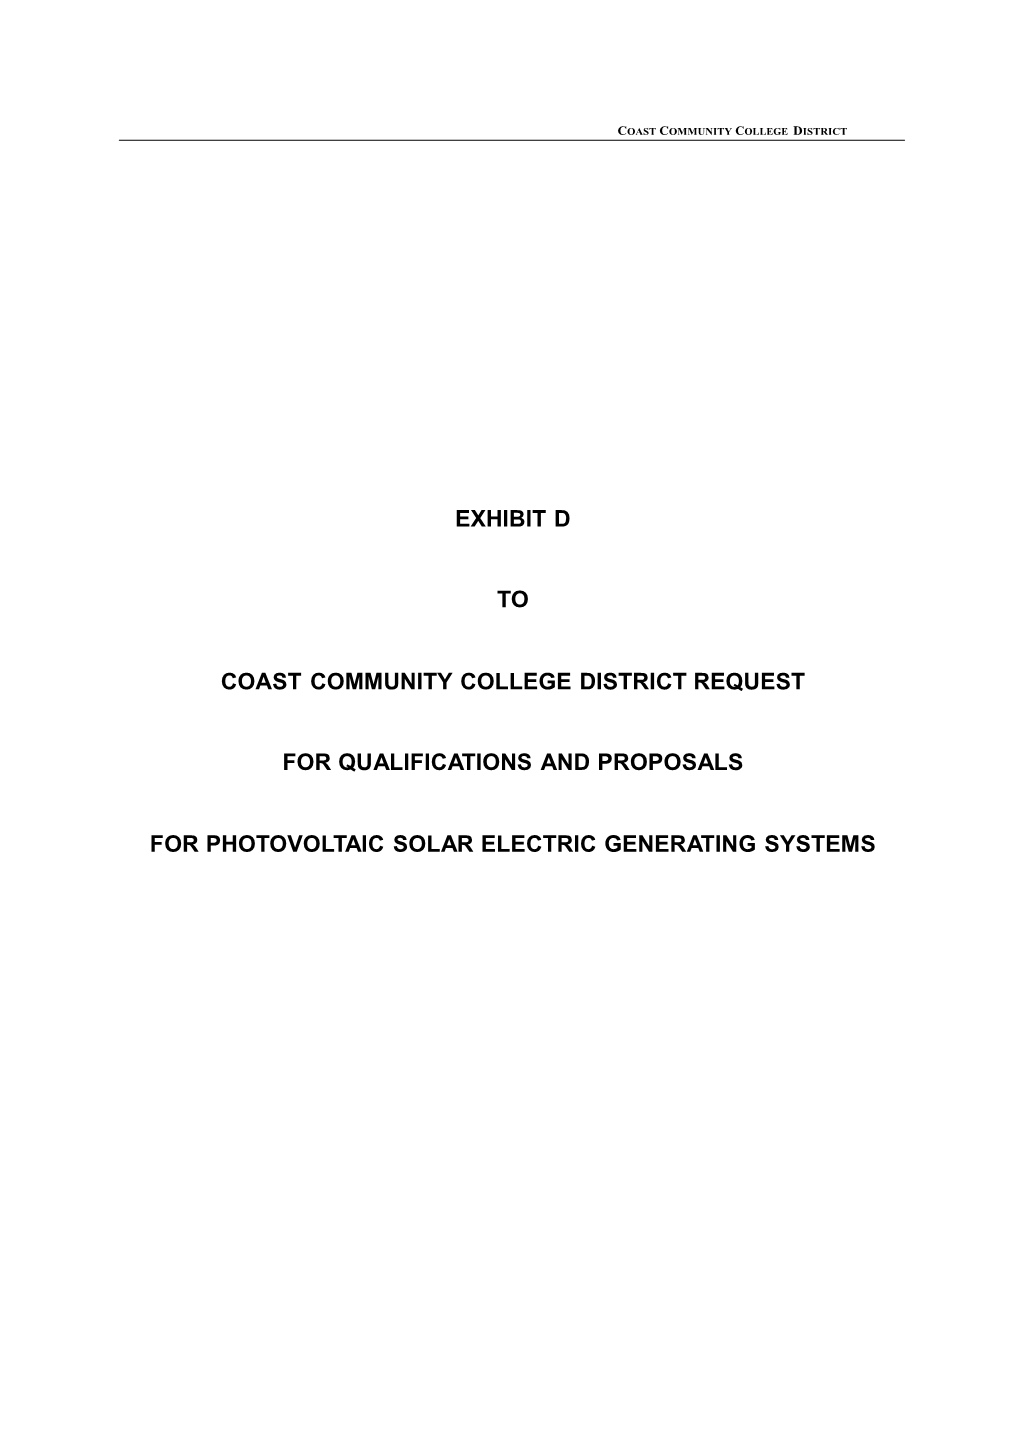 Exhibit D to Coast Community College District Request